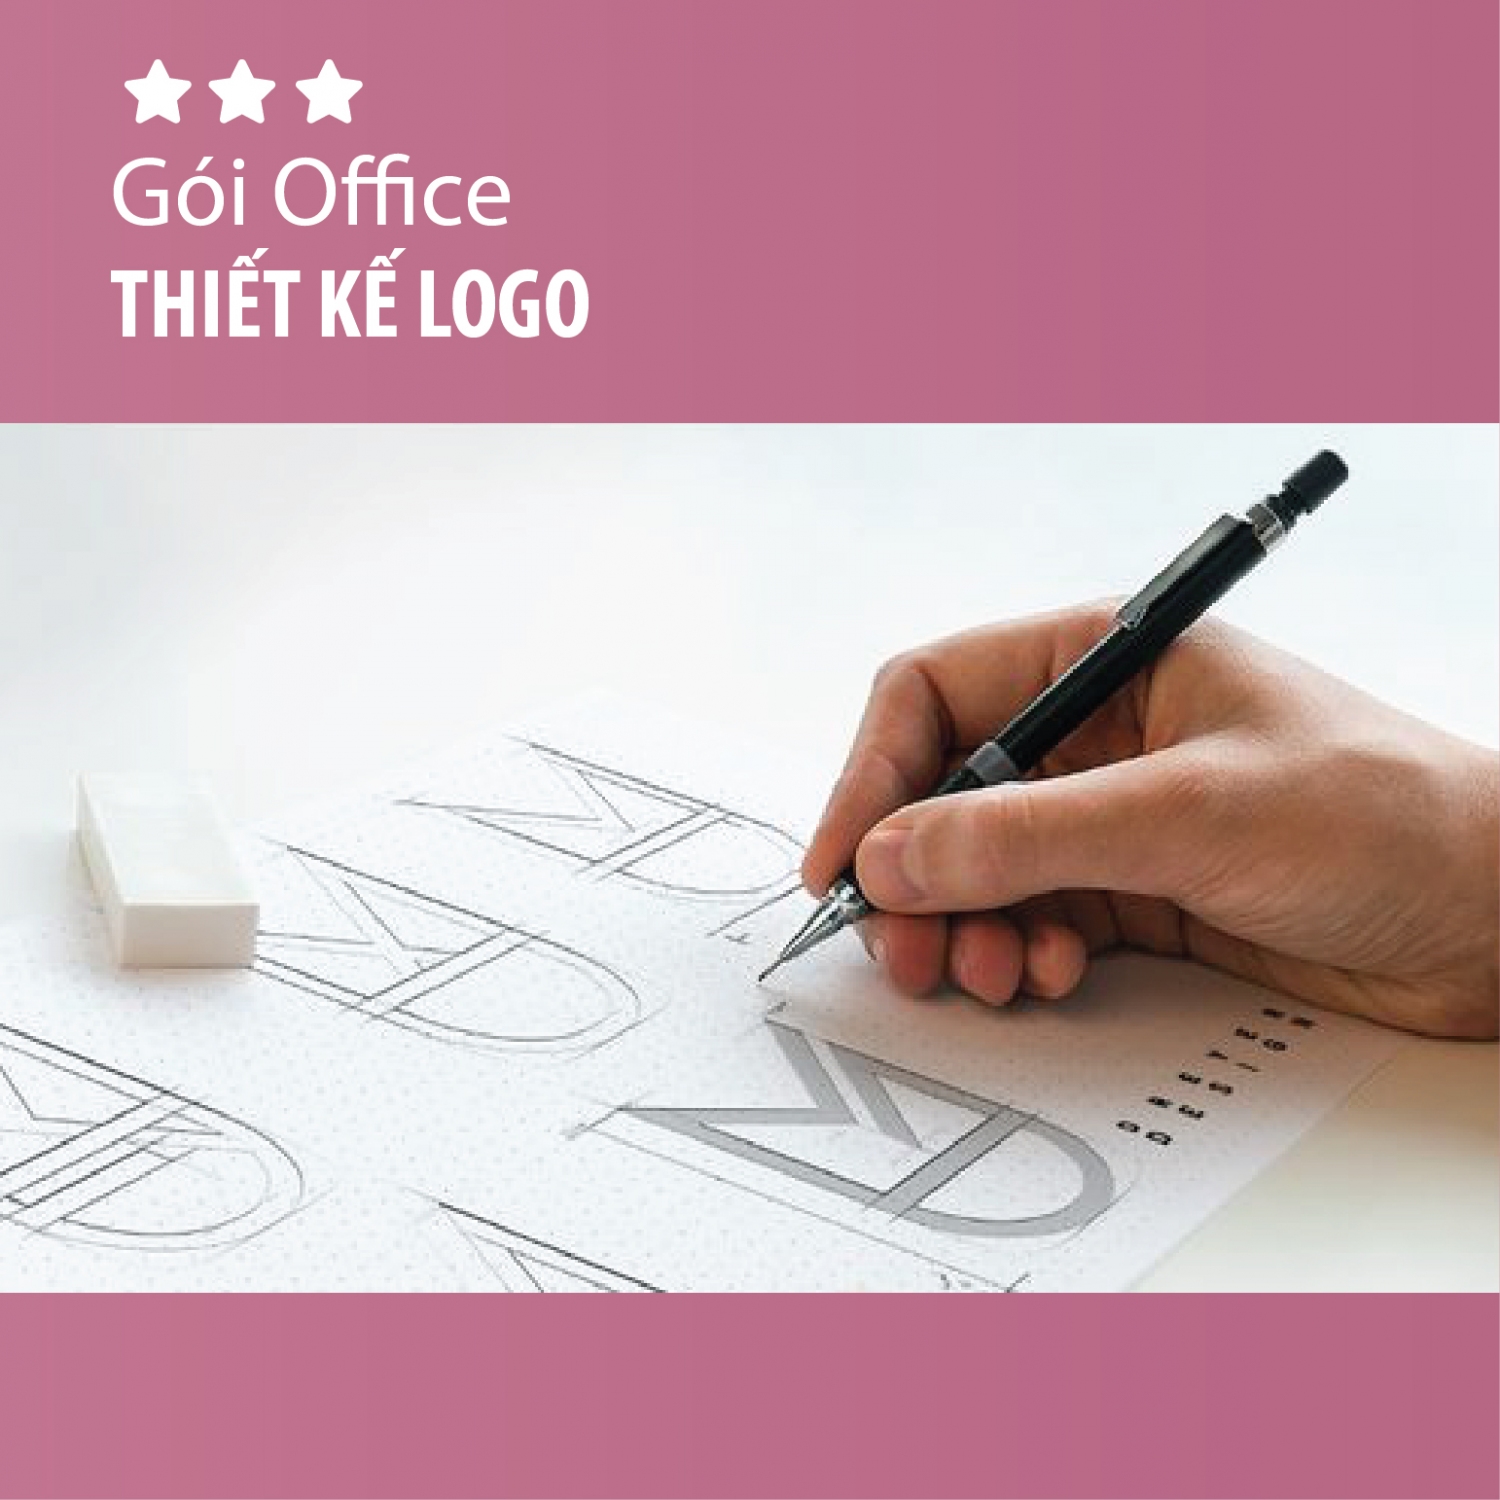 Thiết Kế Logo - Gói Office